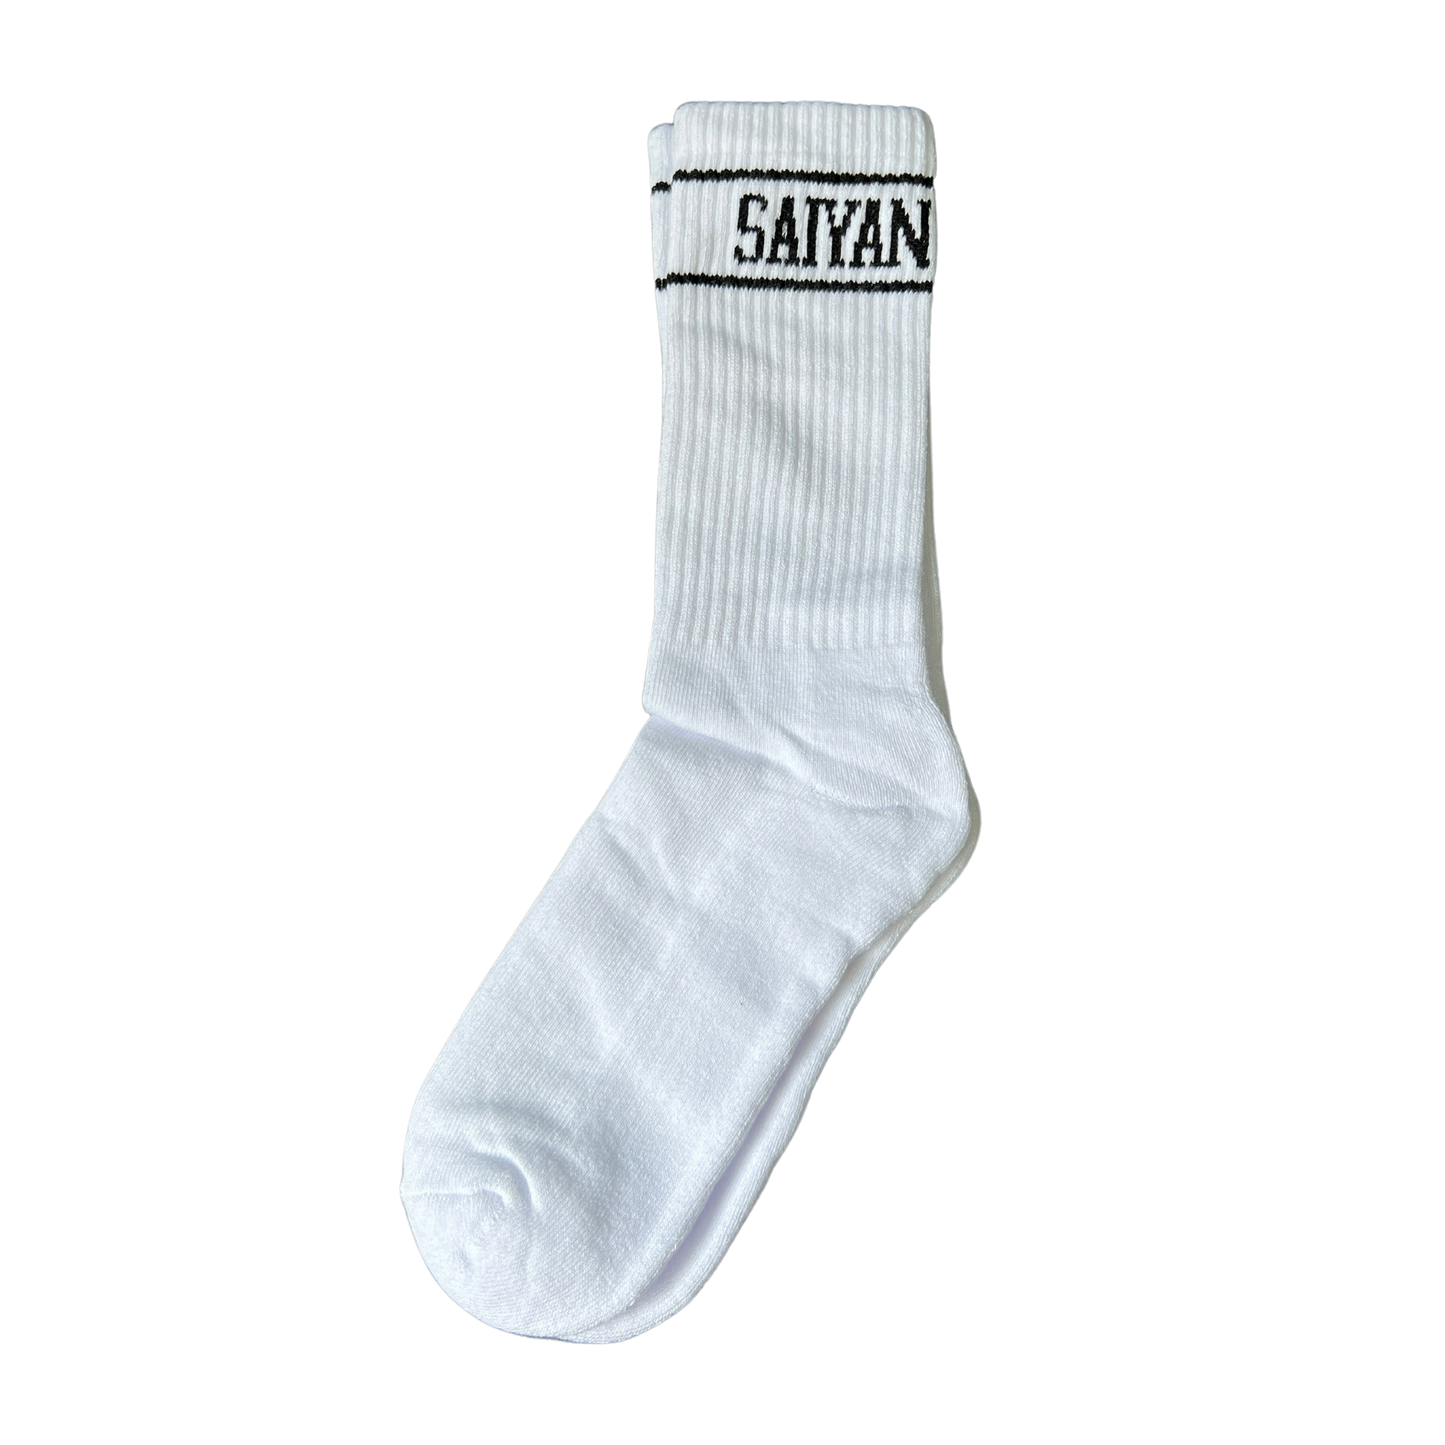 DBZ Saiyan Spellout Sock